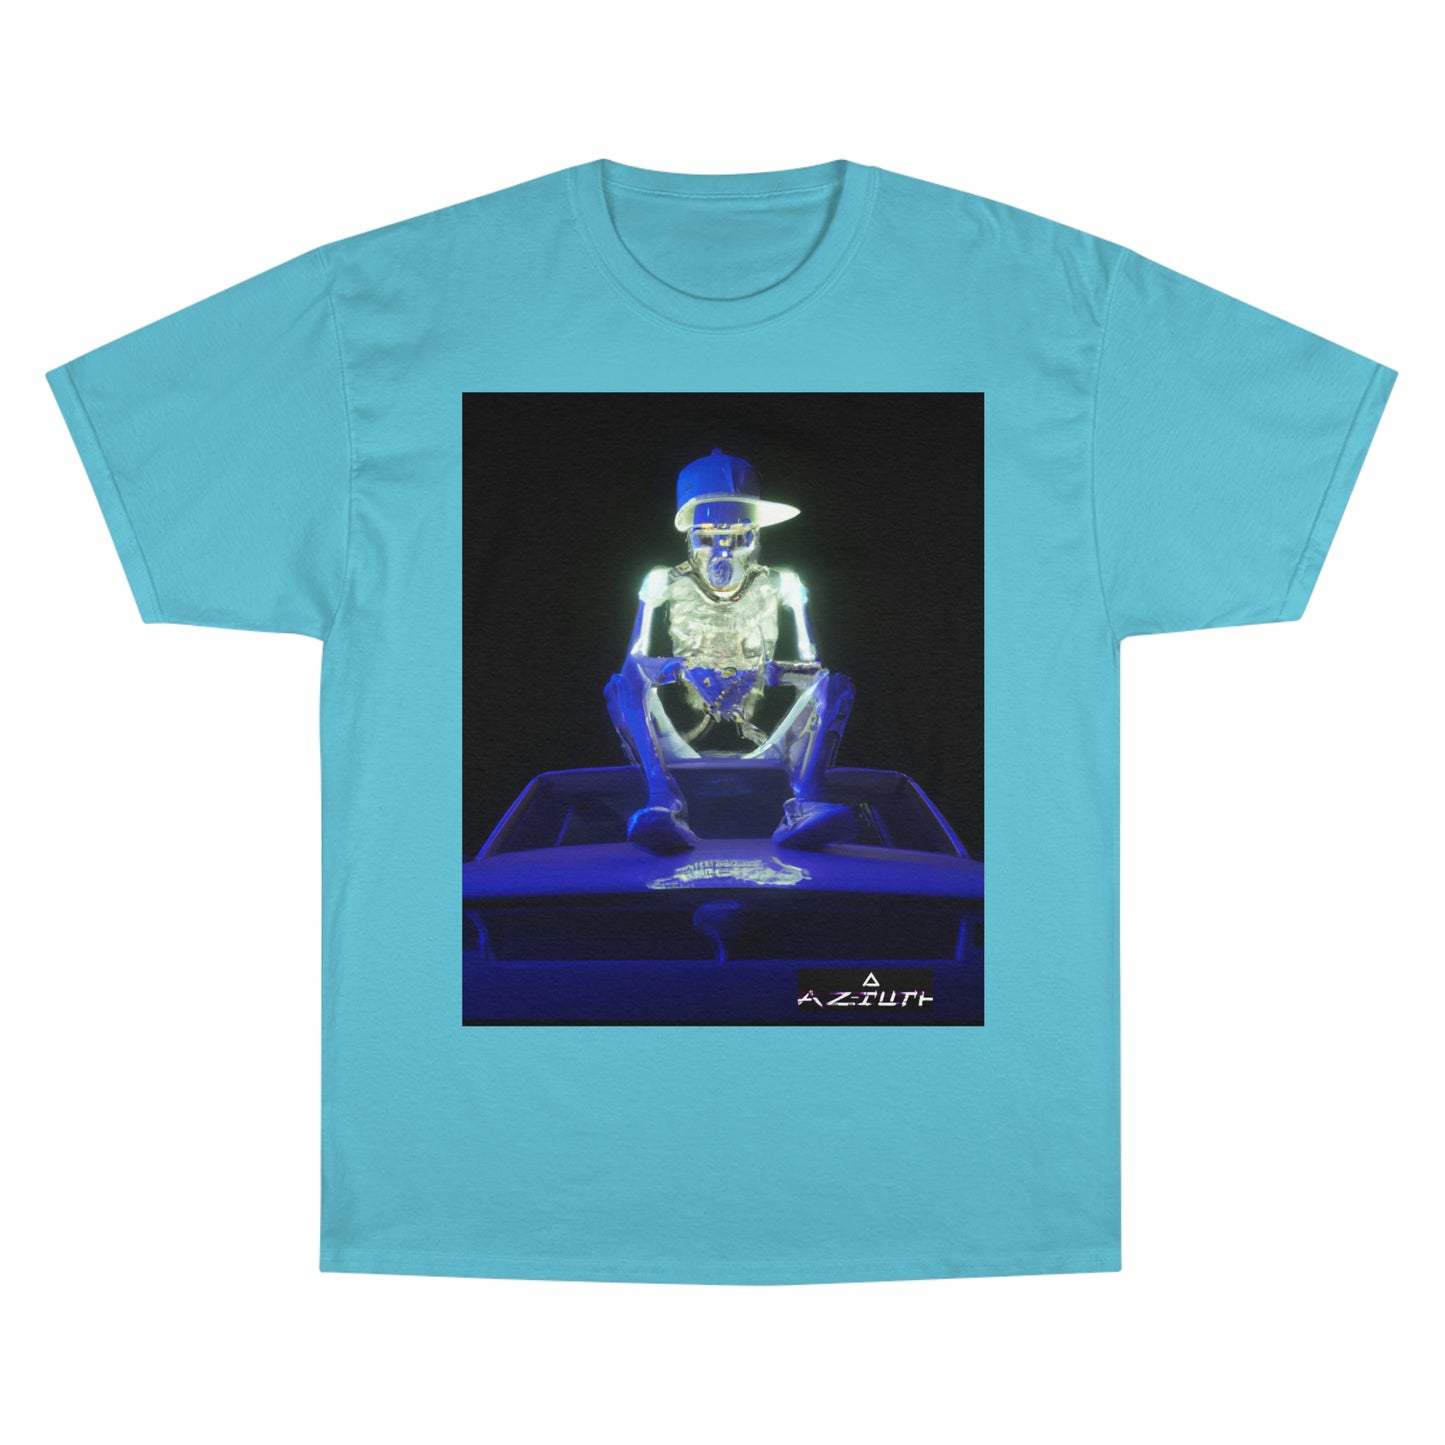 Atziluth Gallery x Champion "Dark Mode On" T-shirt